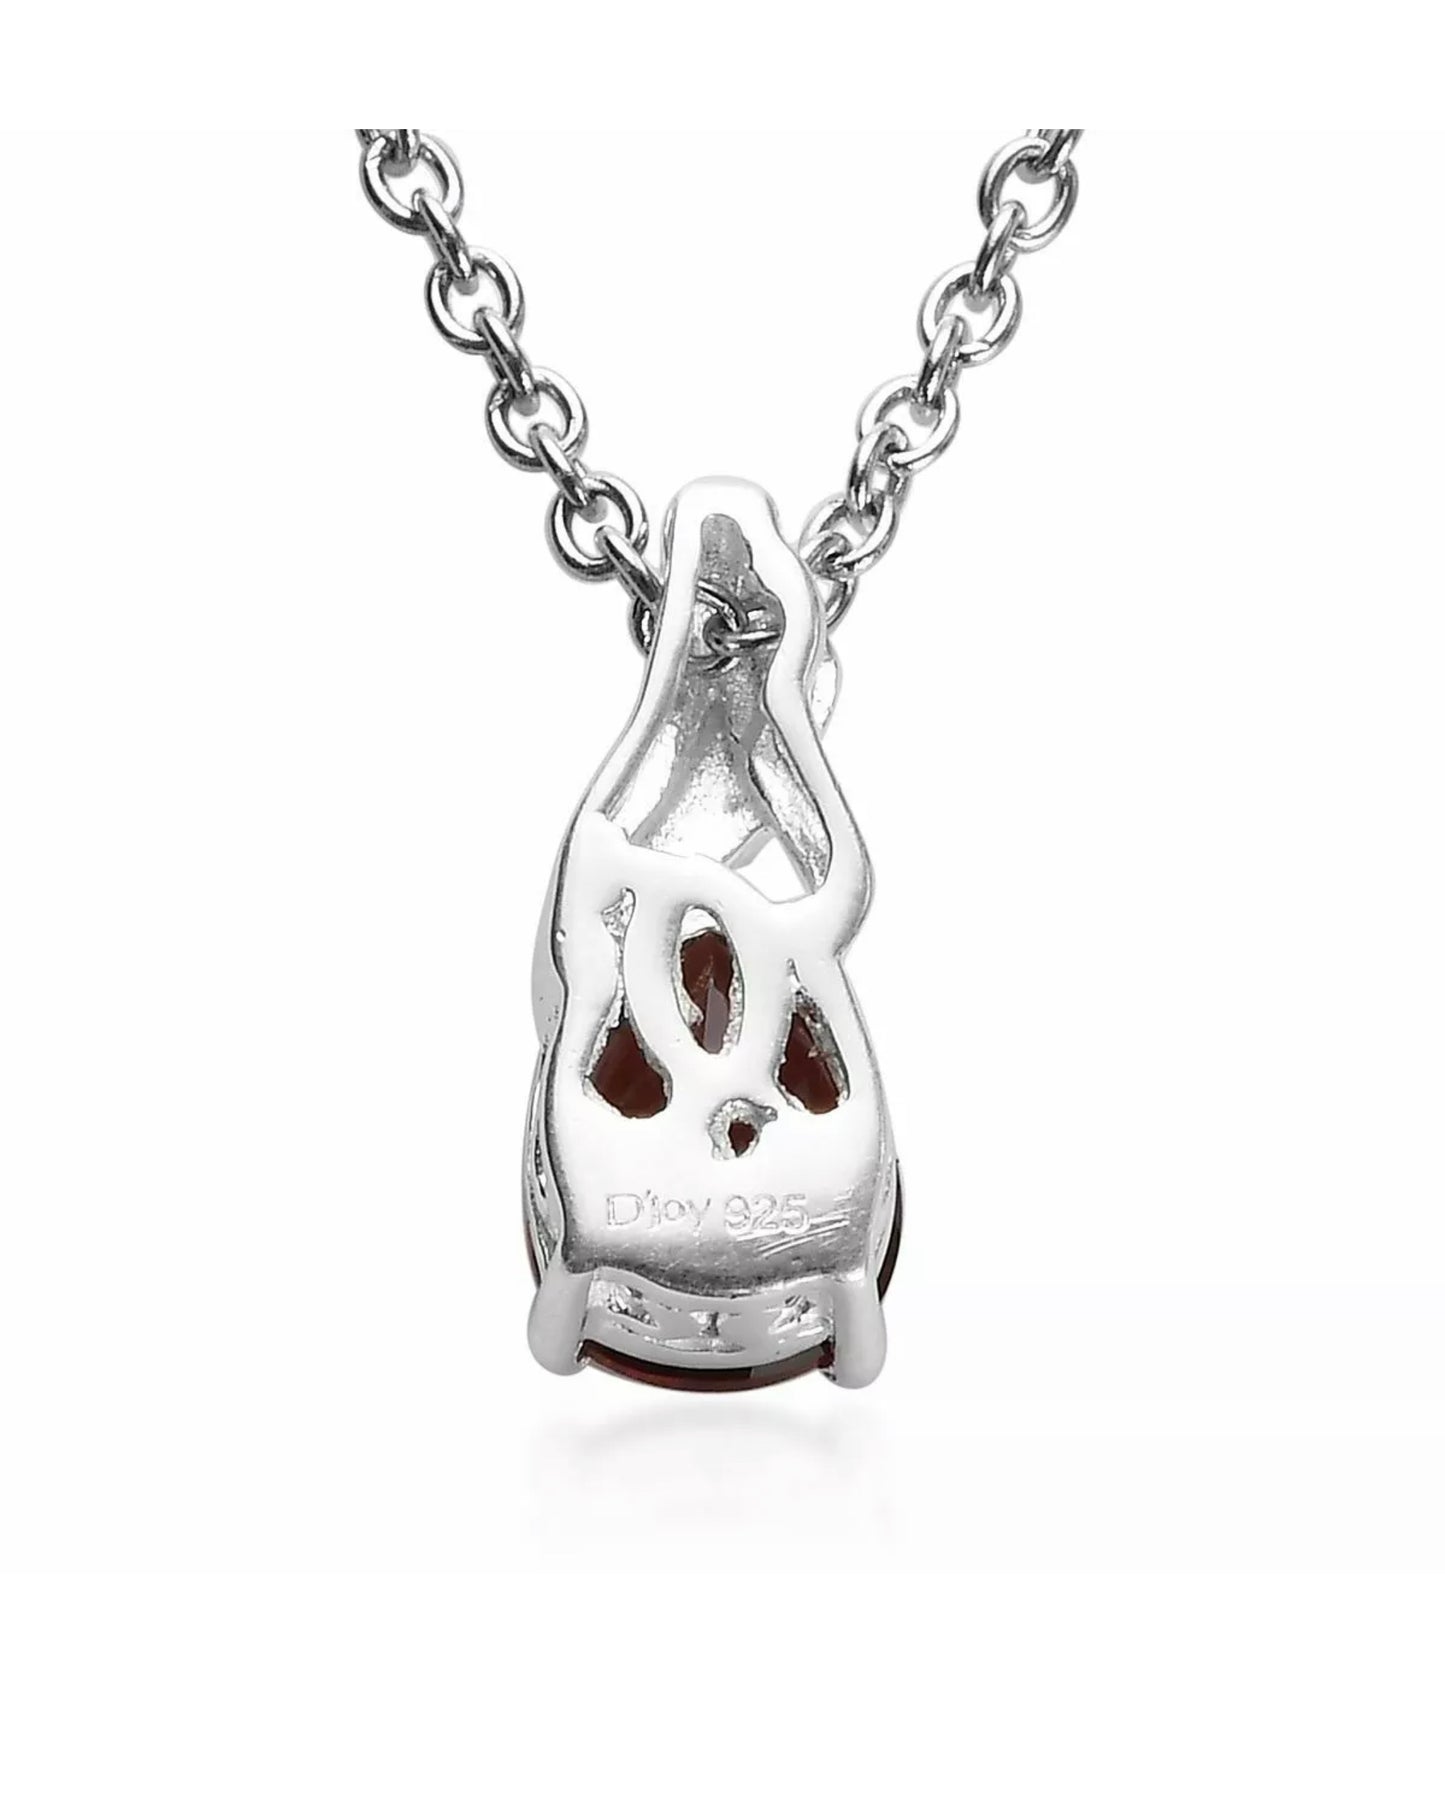 925 Sterling Silver Amethyst Drop Dangle Earrings Chain Necklace Pendant Set 20"